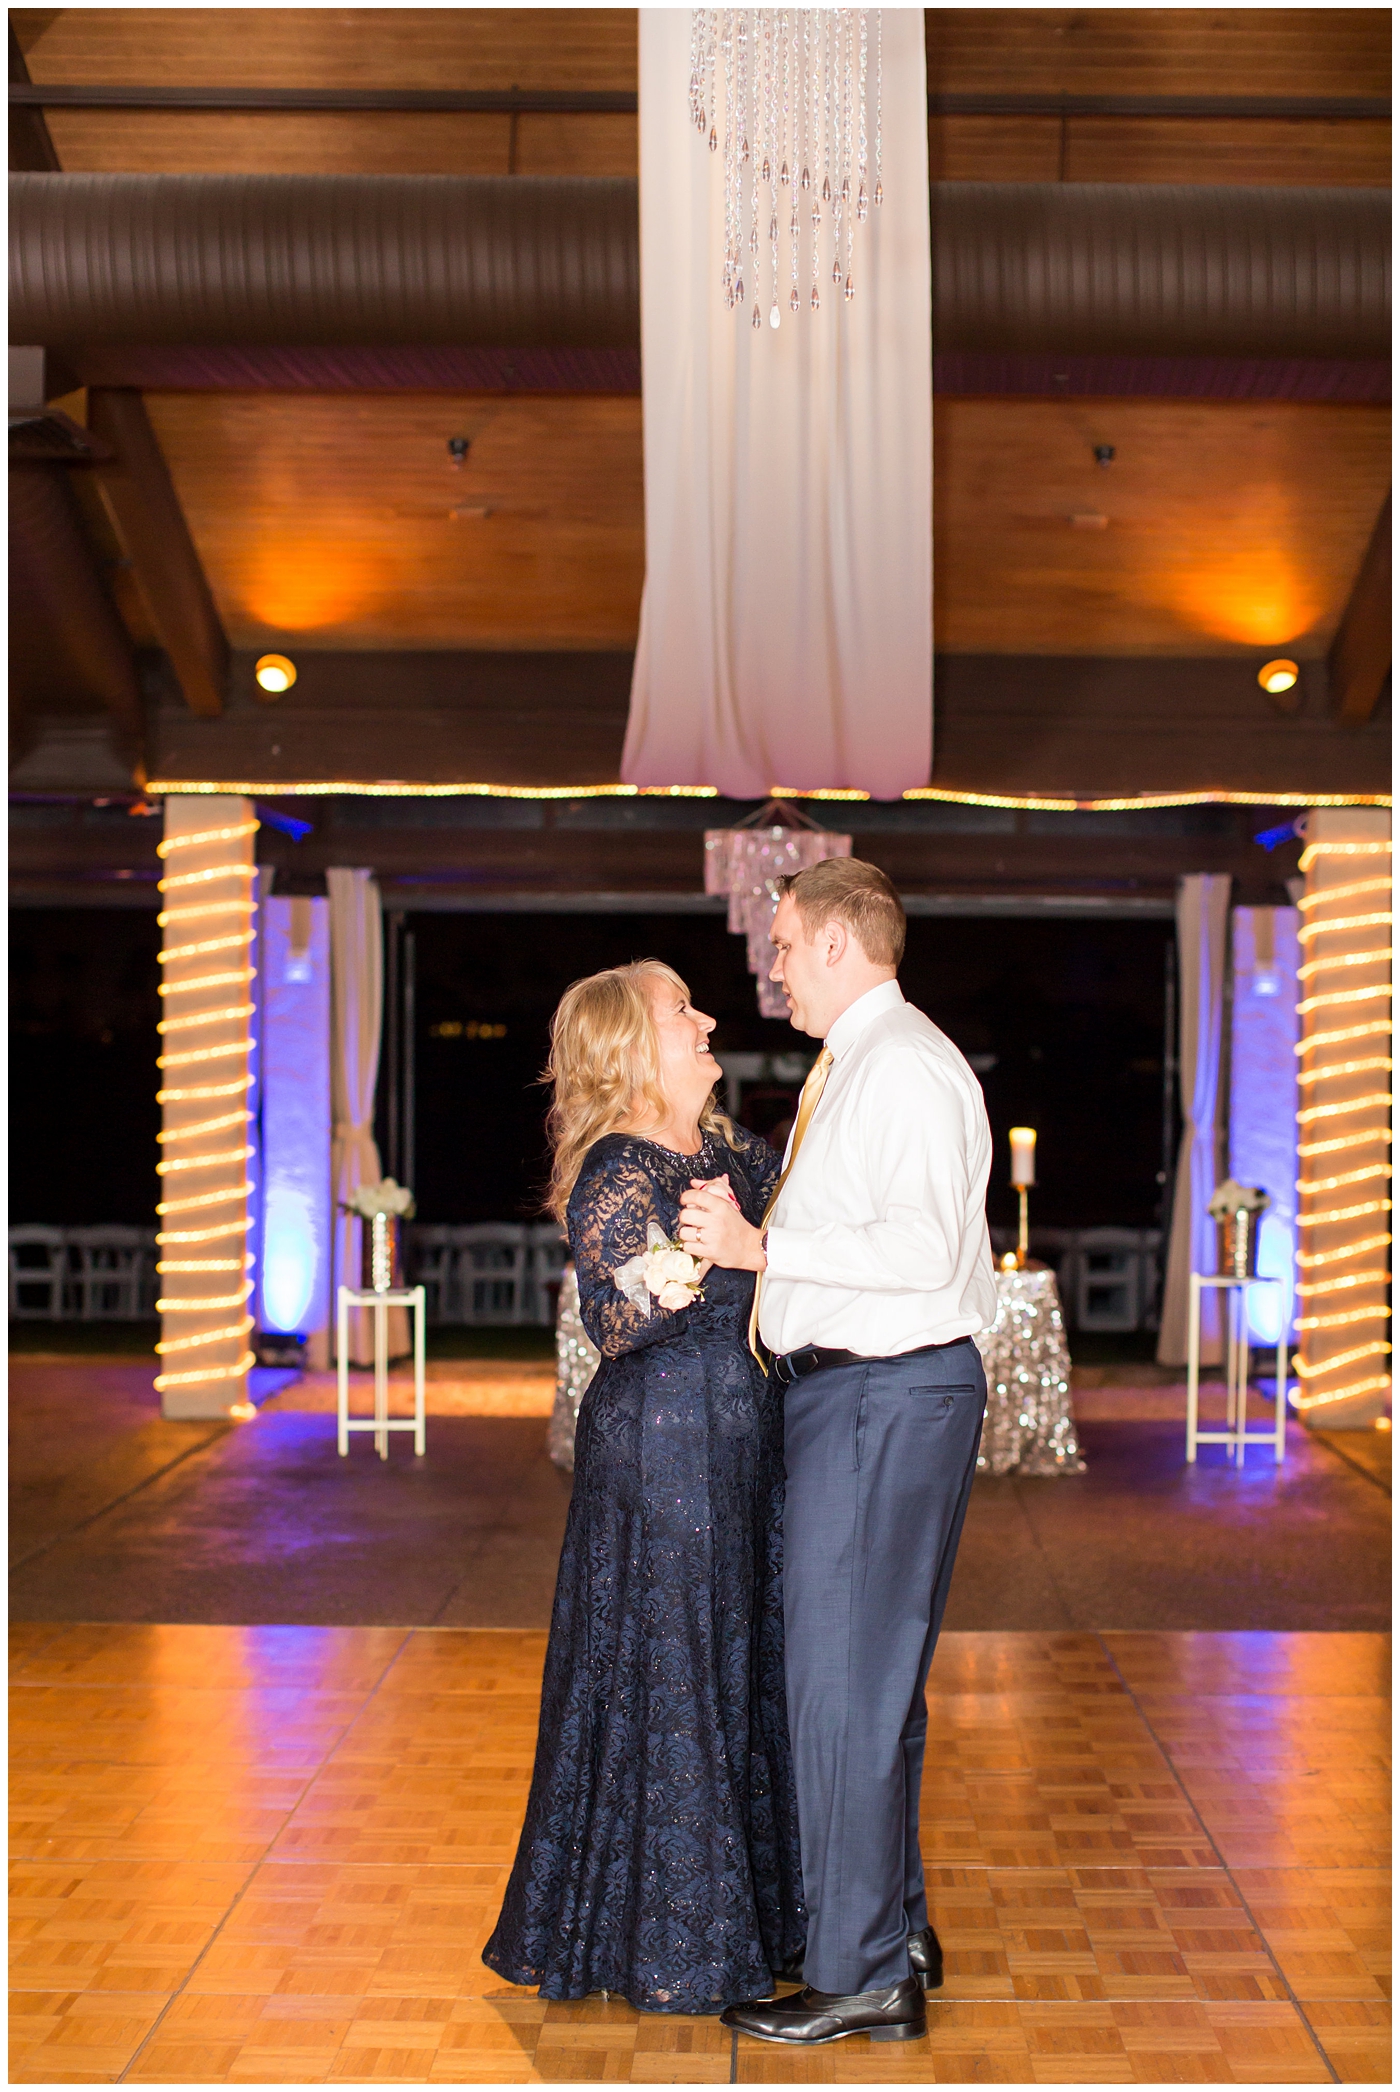 mother son dance during wedding reception in ballroom